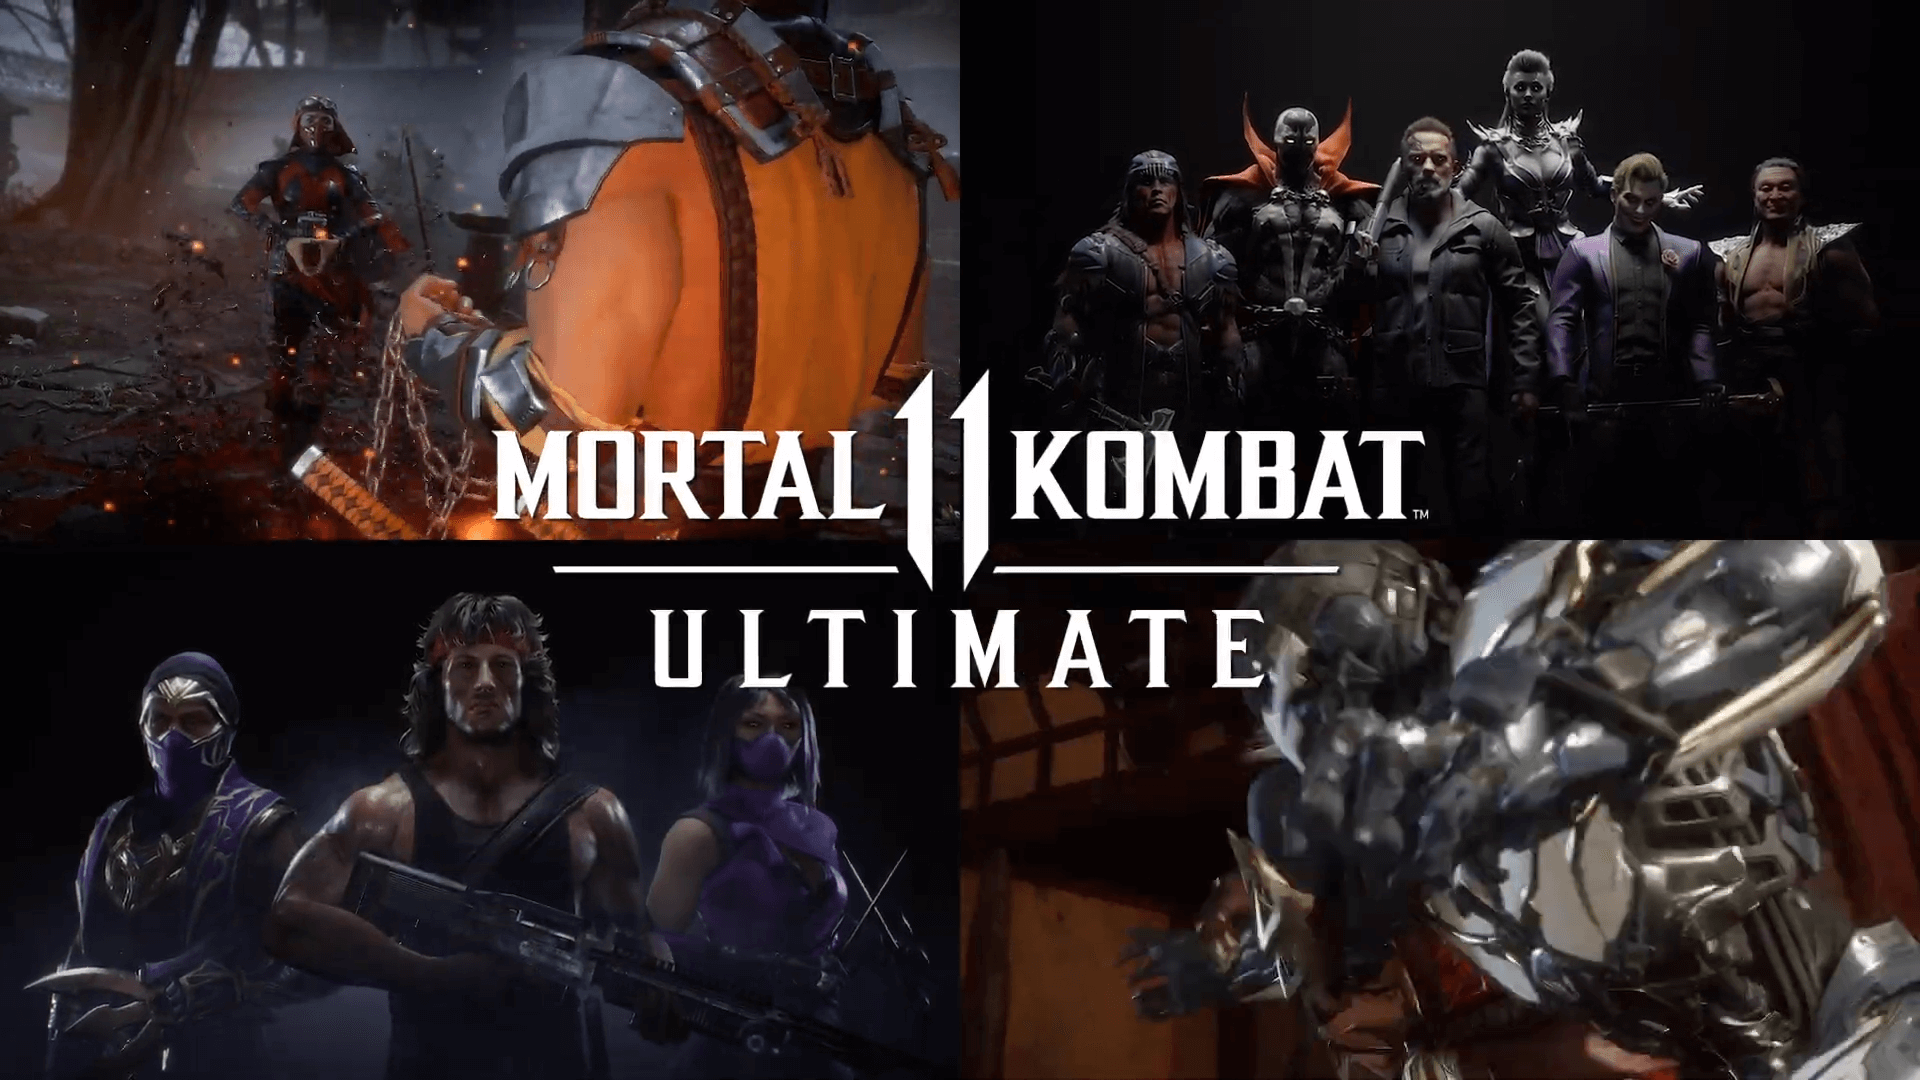 Mortal Kombat Film producer confirms no plans for a release or trailer